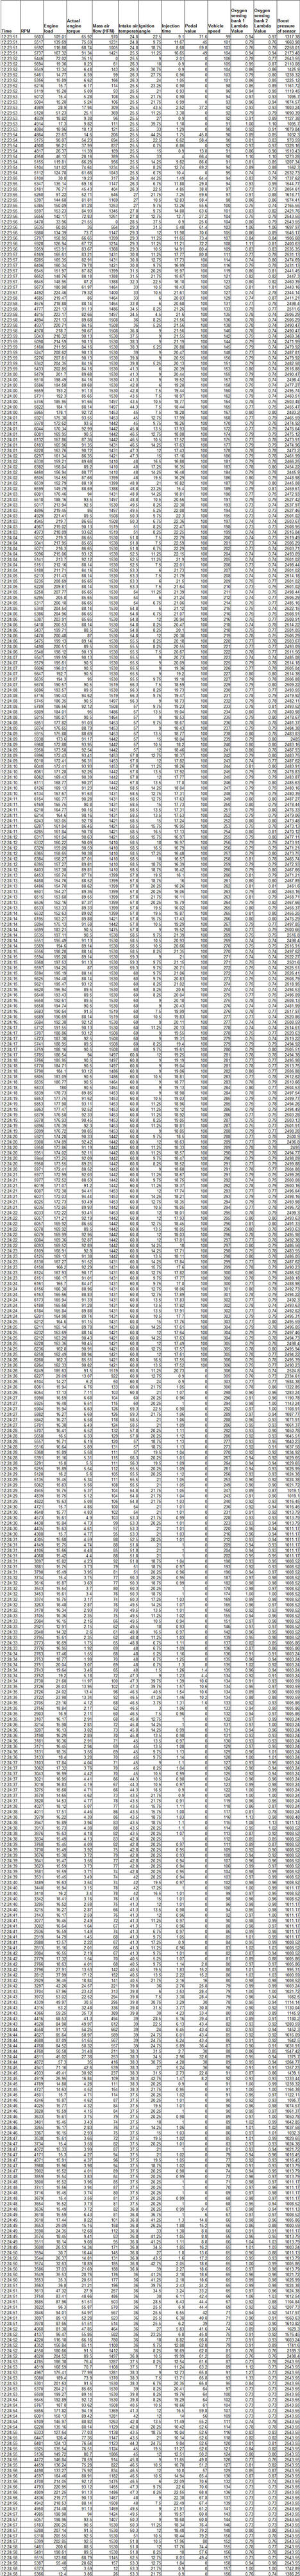 996tt k16/39 results - wow - Page 1 - Porsche General - PistonHeads